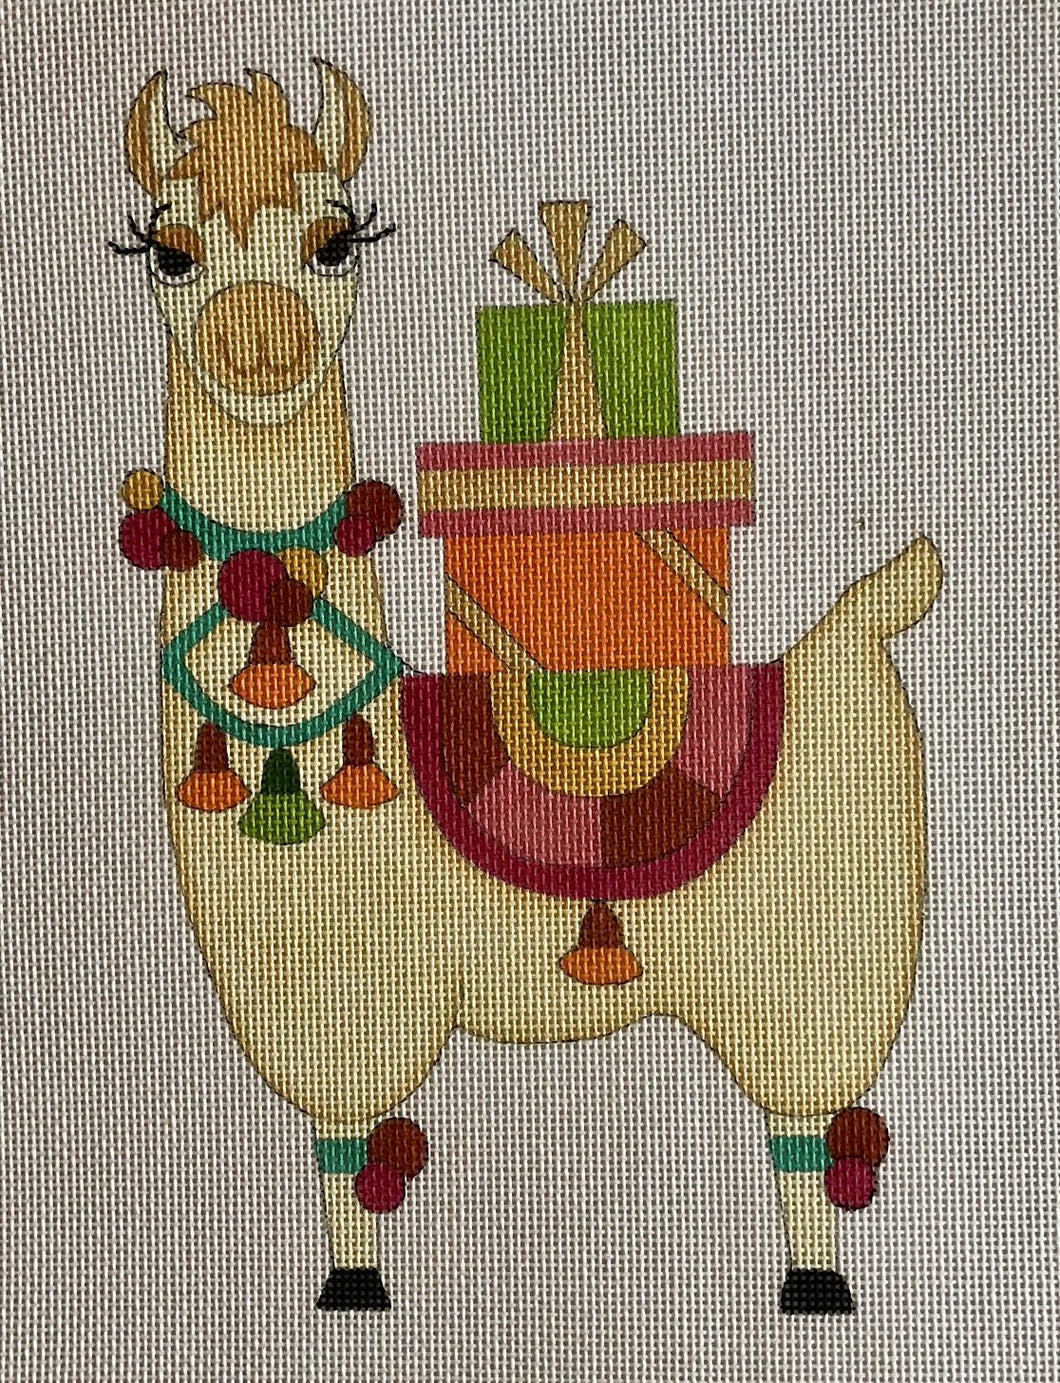 llama with presents